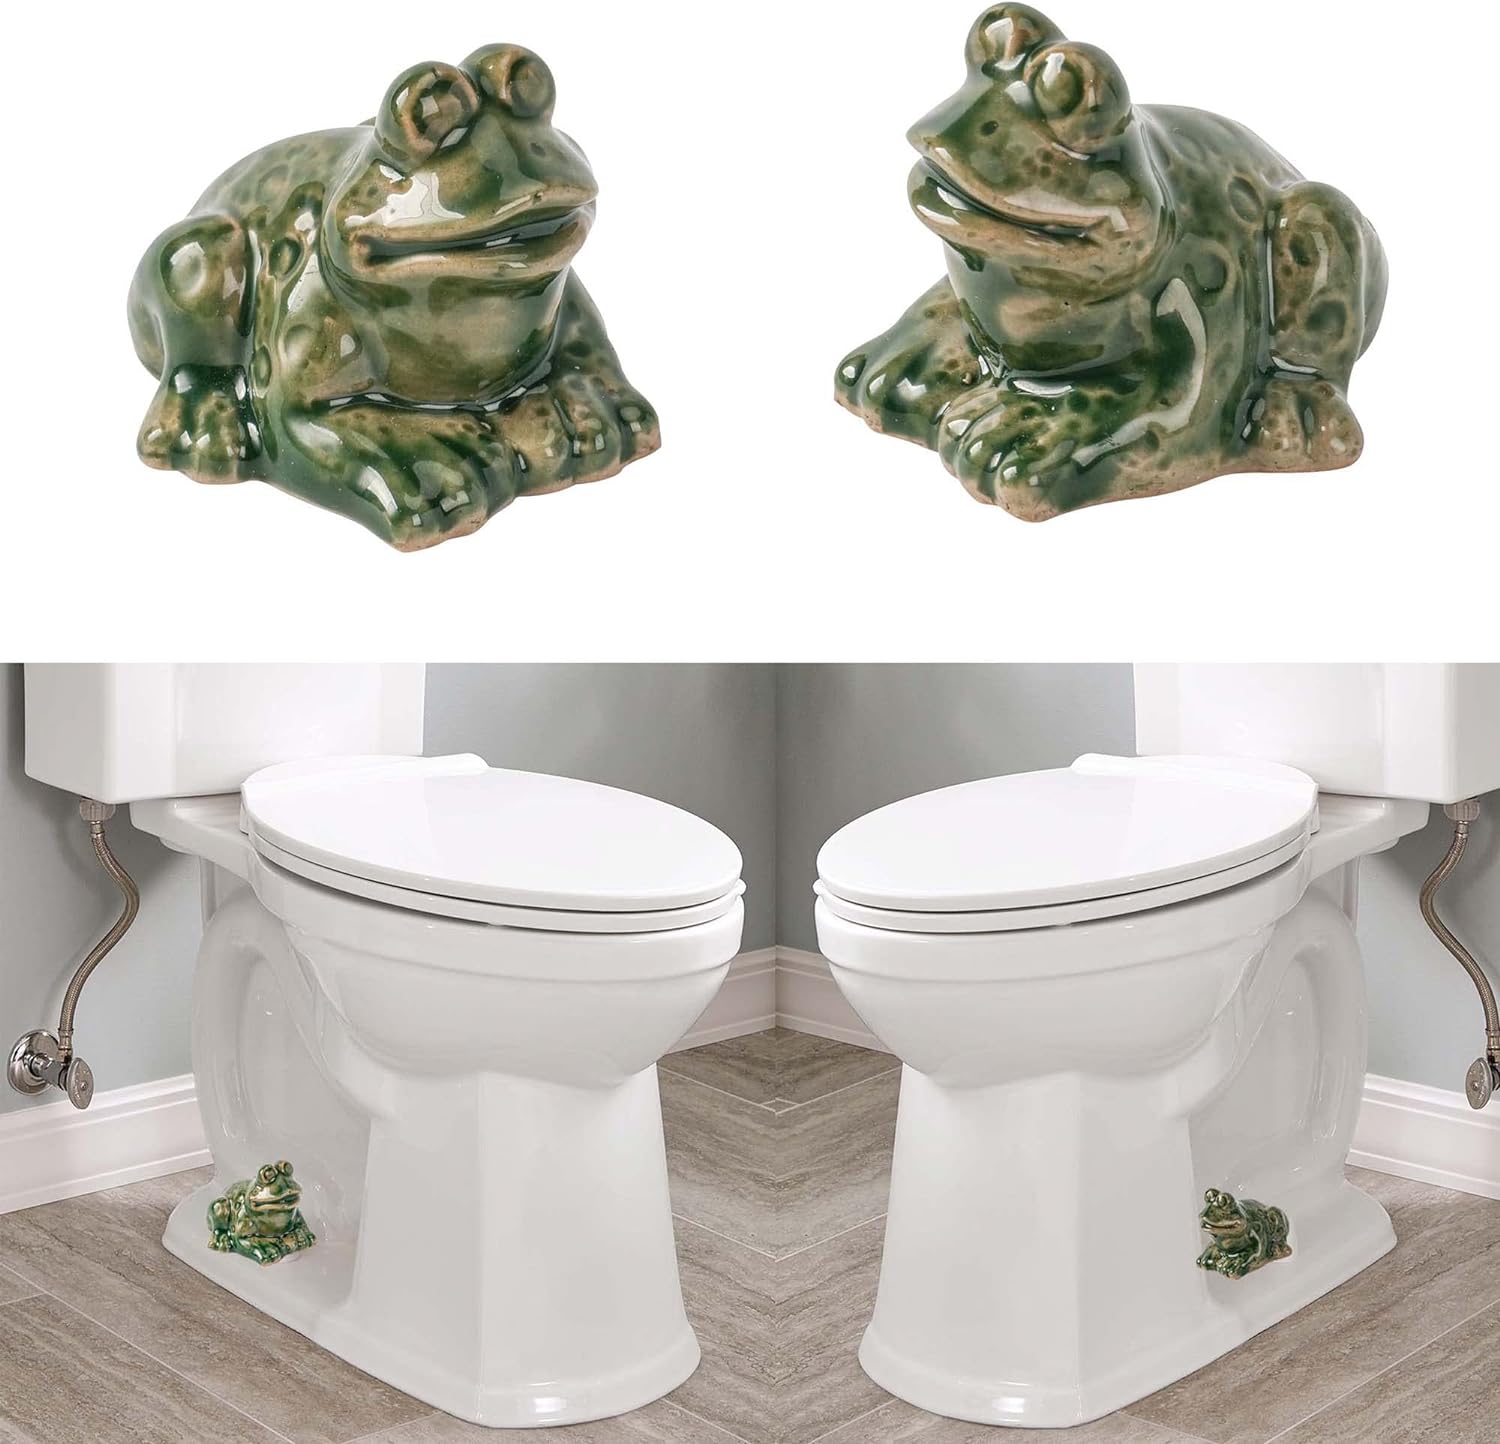 Universal Ceramic Toilet Bolt Covers Decorative